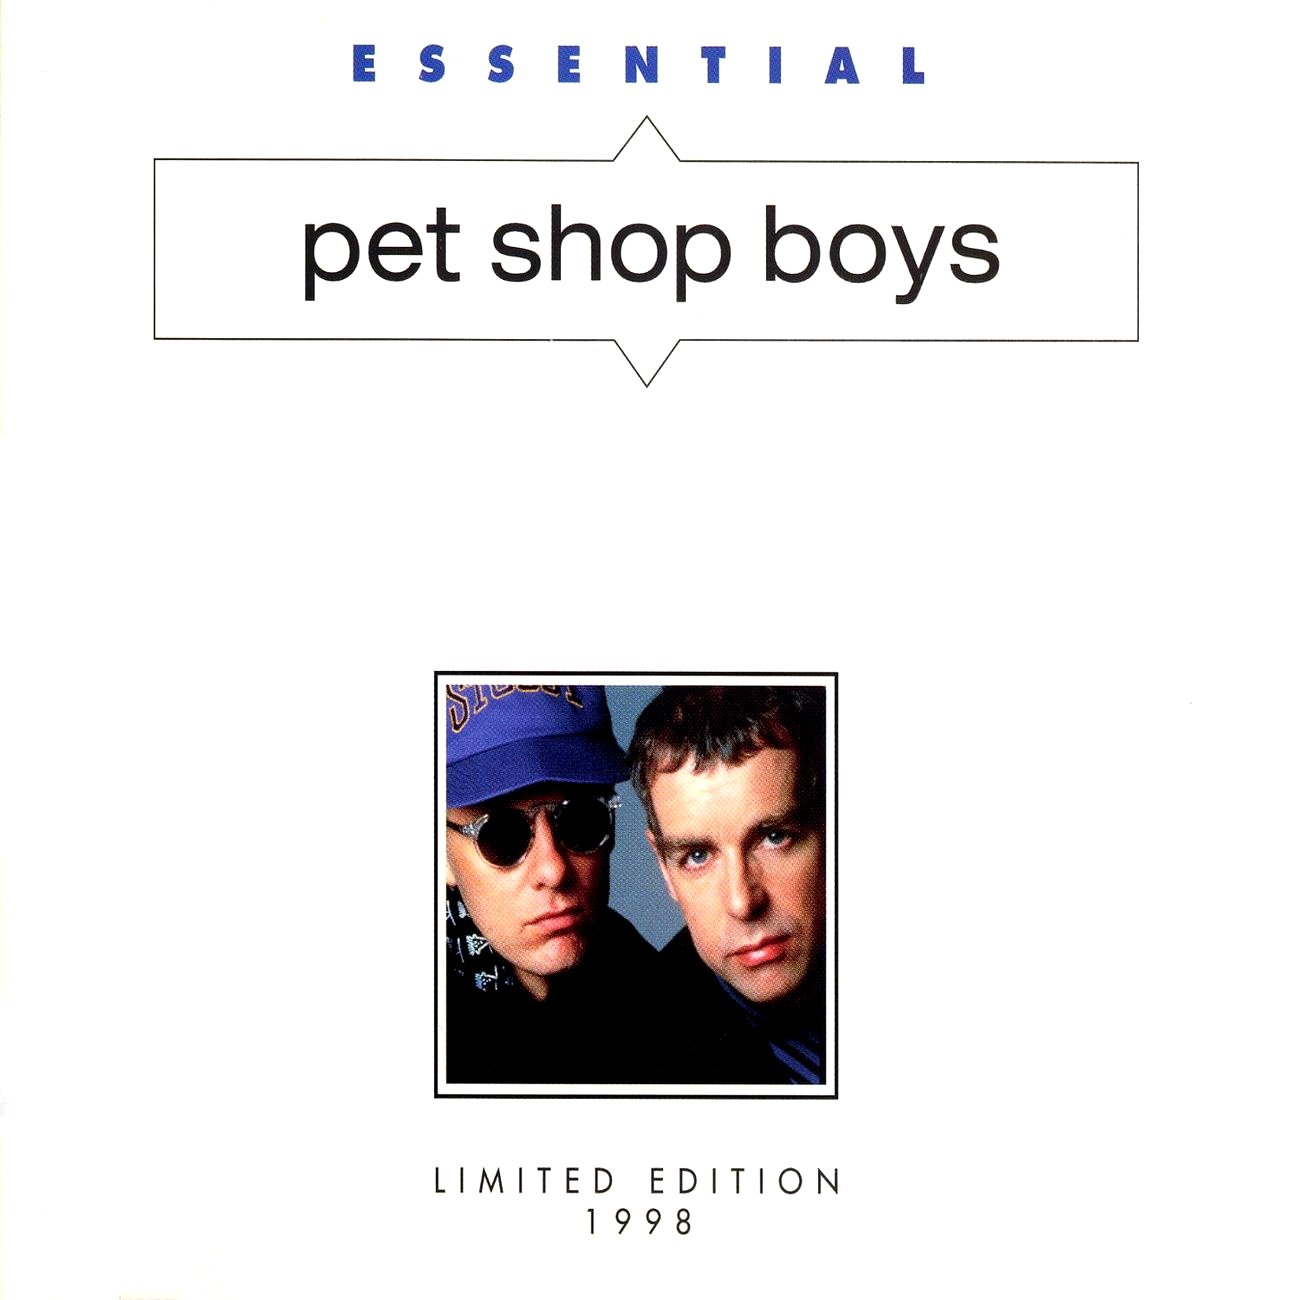 Pet shop boys dancing. Pet shop boys 1998. Pet shop boys Essential. Pet shop boys обложки альбомов. Pet shop boys обложка.